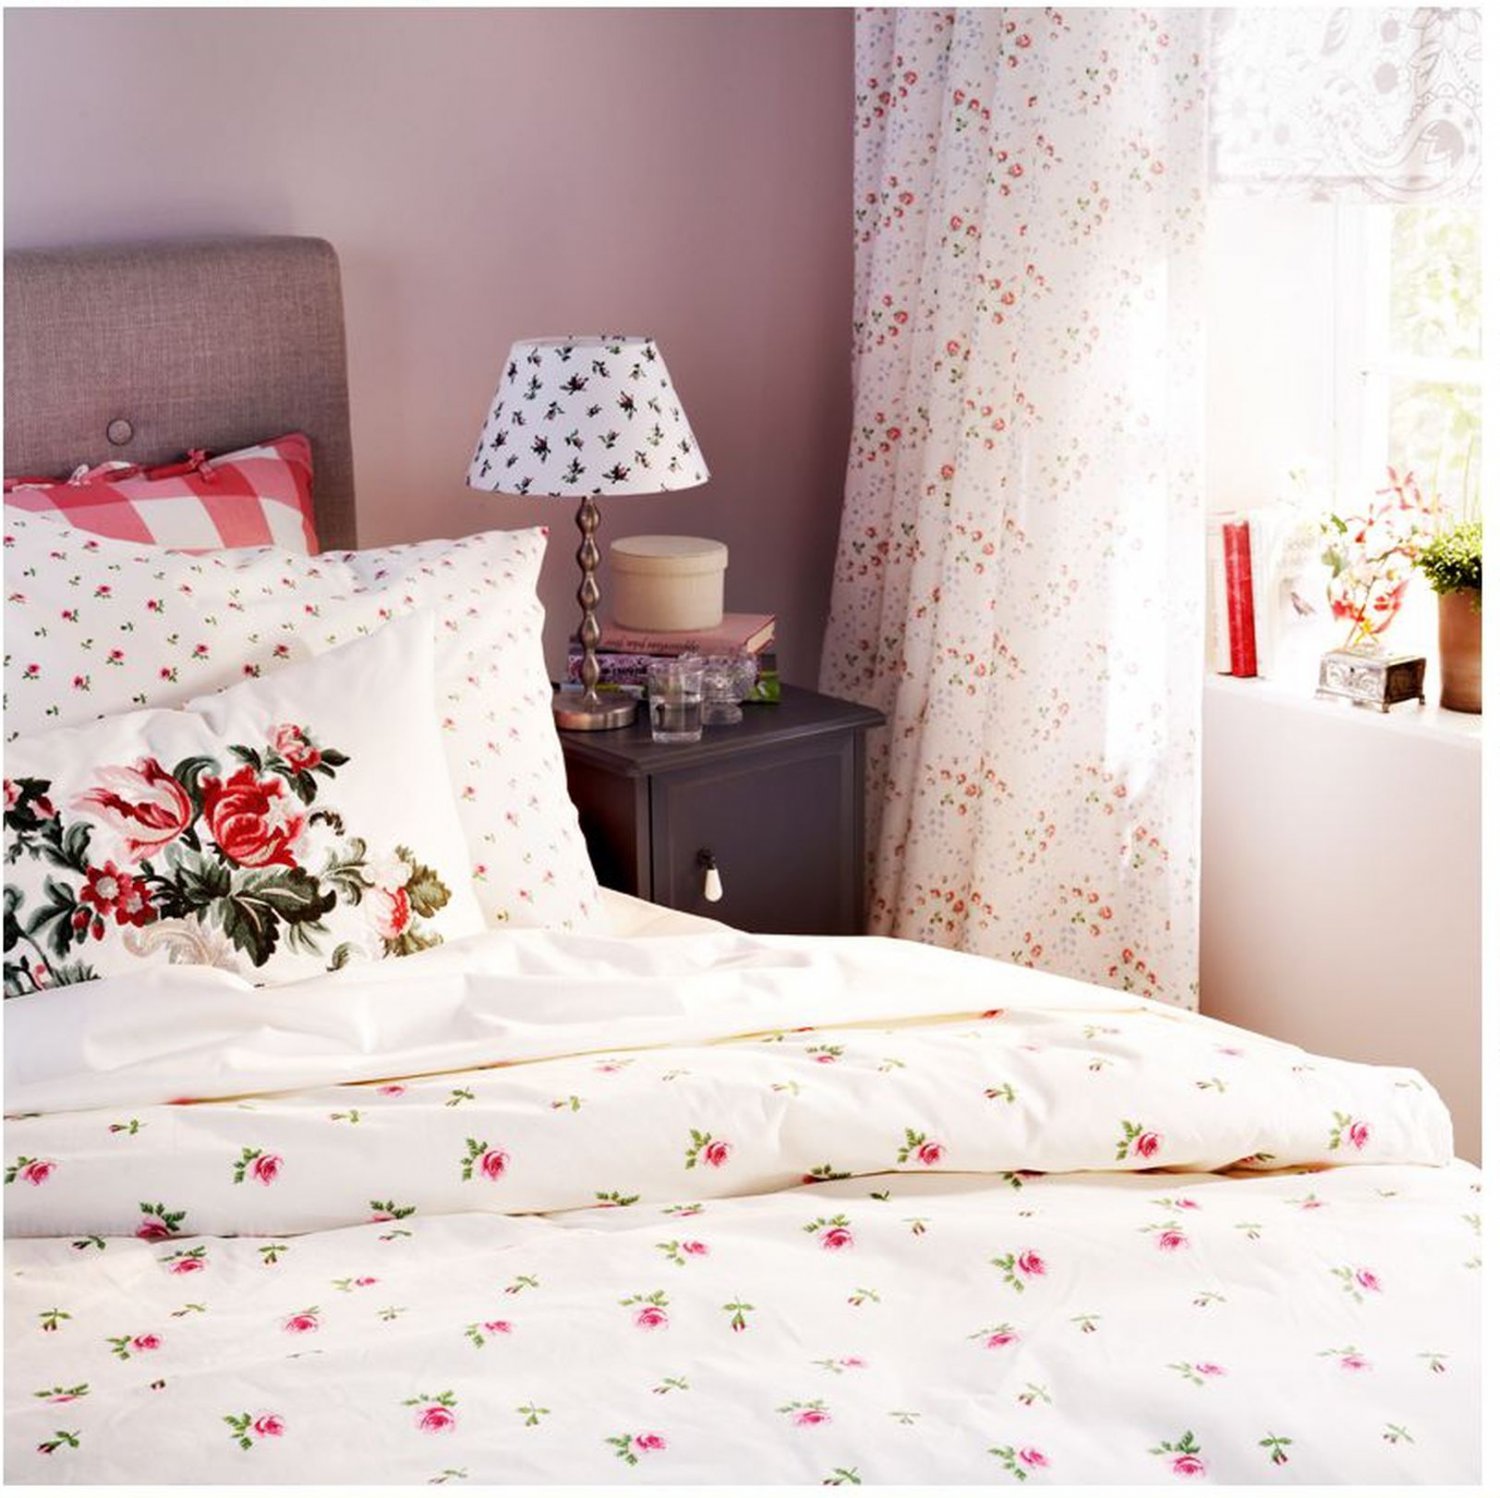 IKEA Emelina Knopp KING Duvet COVER Set PINK ROSEBUDS Roses Romantic